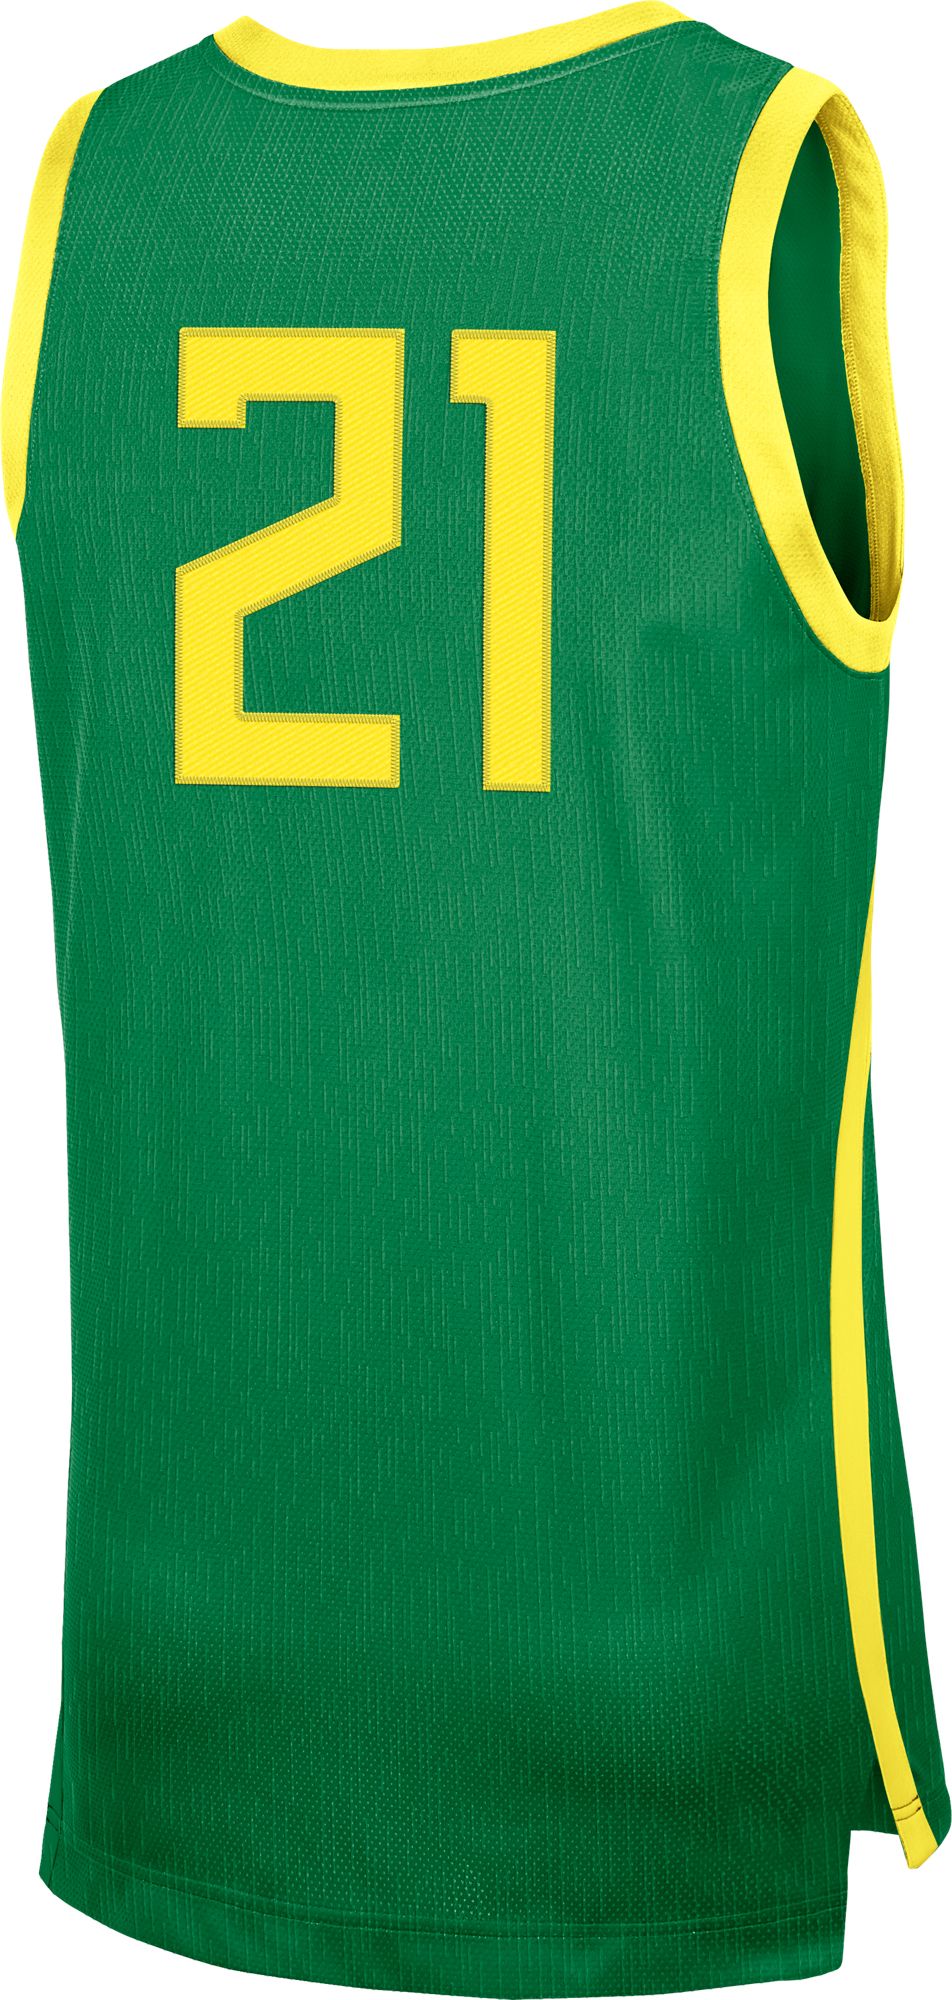 Nike Men's Oregon Ducks #21 Green Replica Basketball Jersey